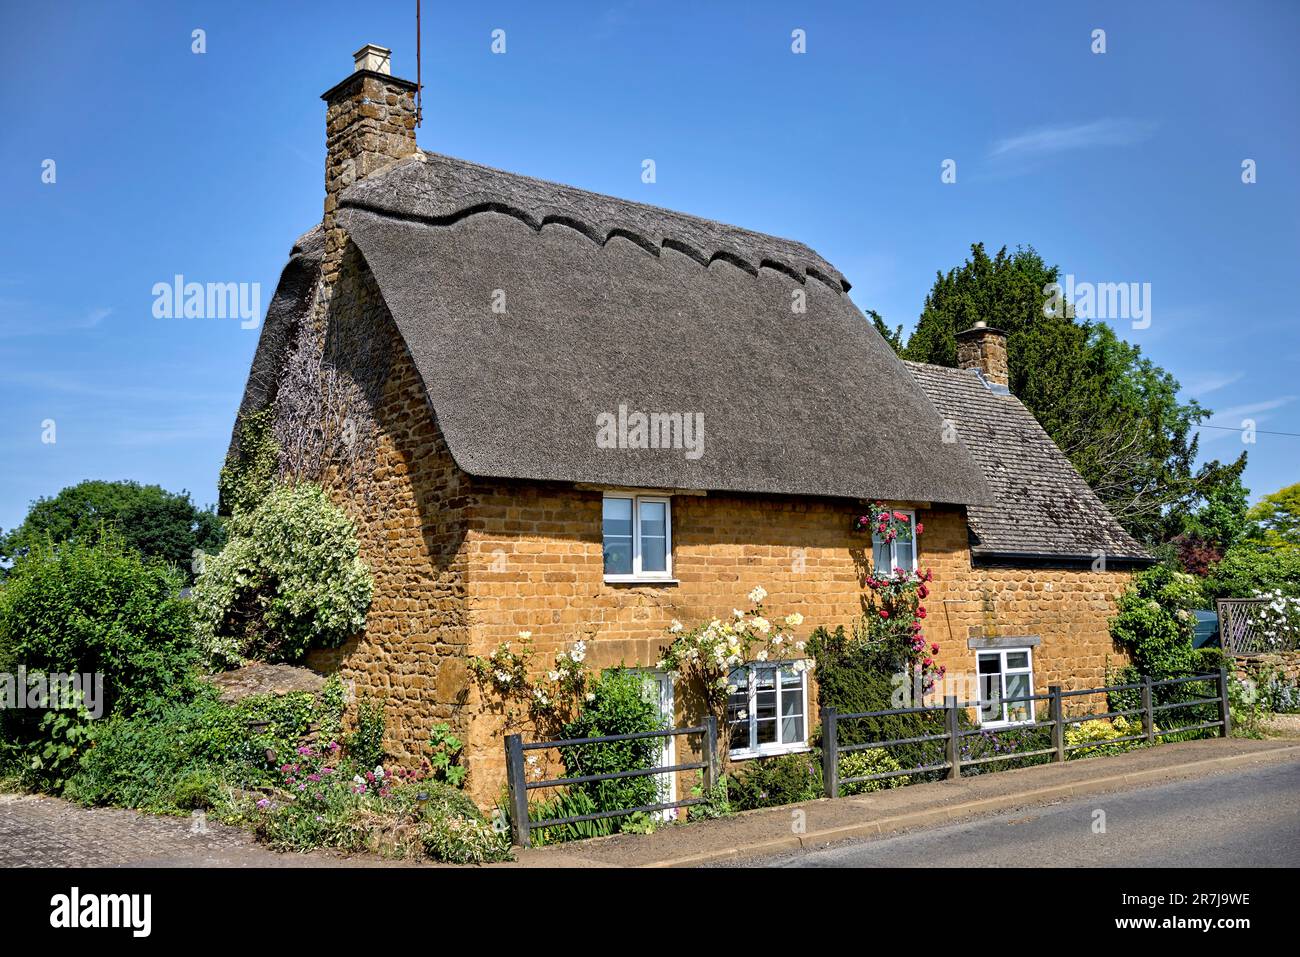 Cottage con tetto in paglia UK.pittoresco cottage tradizionale con tetto in paglia esterno in un ambiente rurale inglese. Wroxton St Mary Banbury Oxfordshire Inghilterra Foto Stock